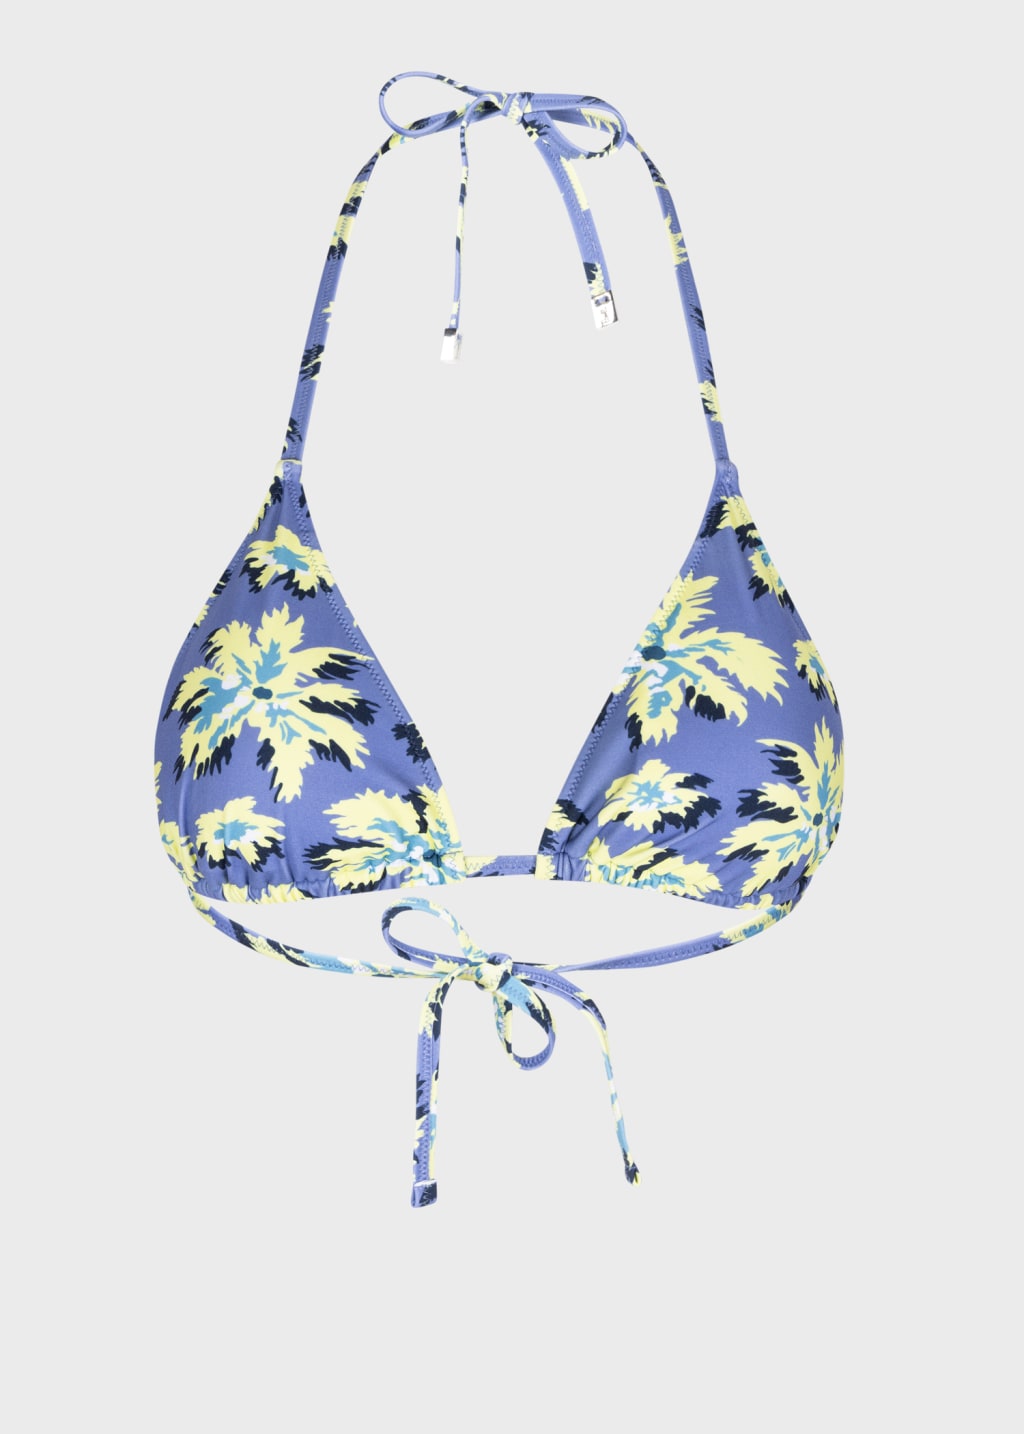 Product view - Women's Cornflower Blue 'Palmera' Triangle Bikini Top